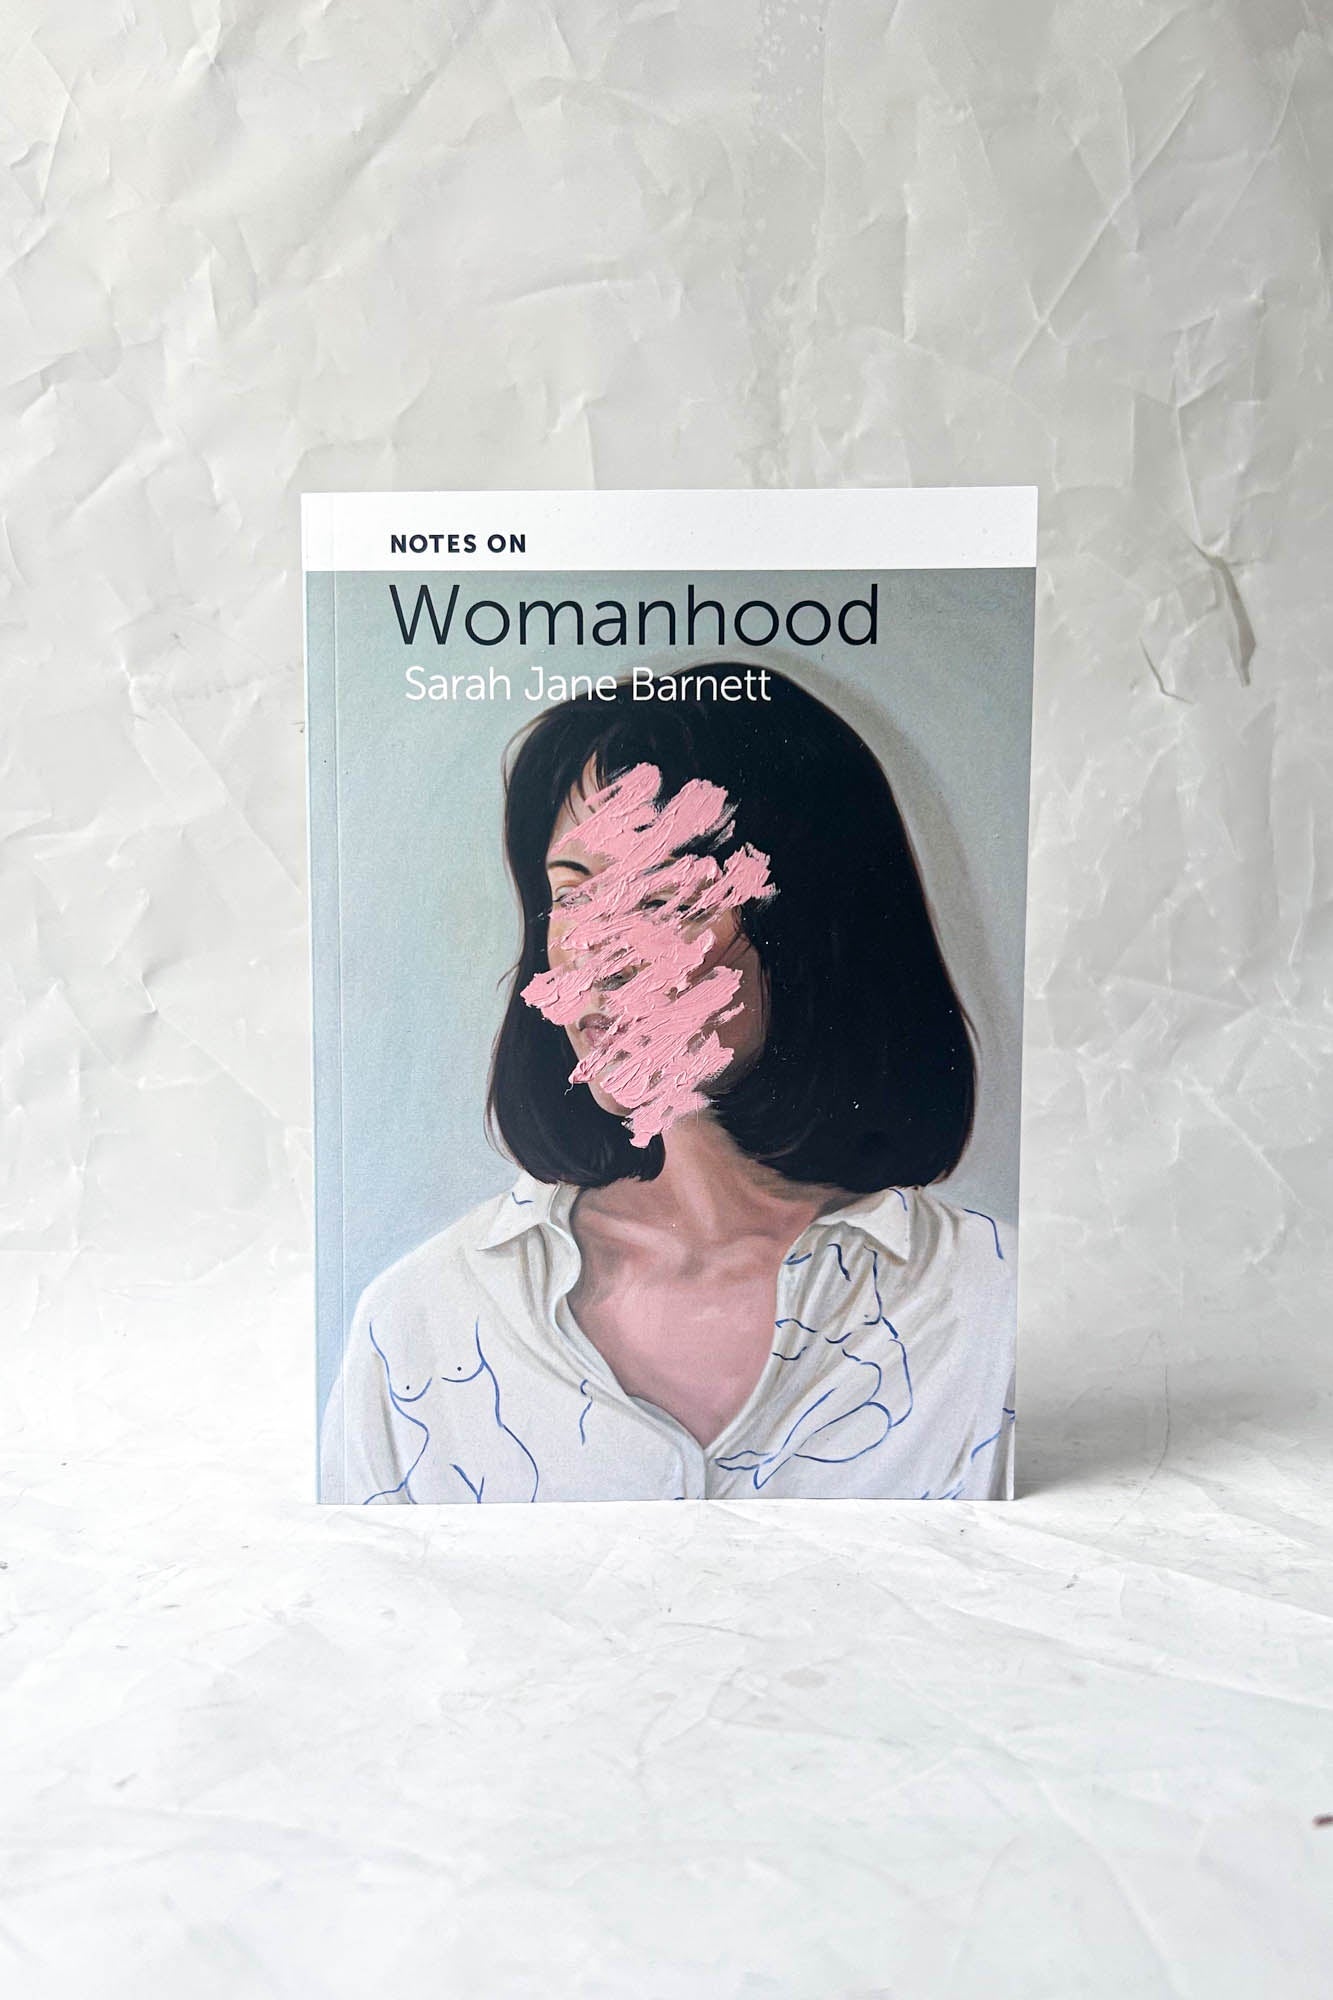 Notes on Womanhood by Sarah Jane Barnett